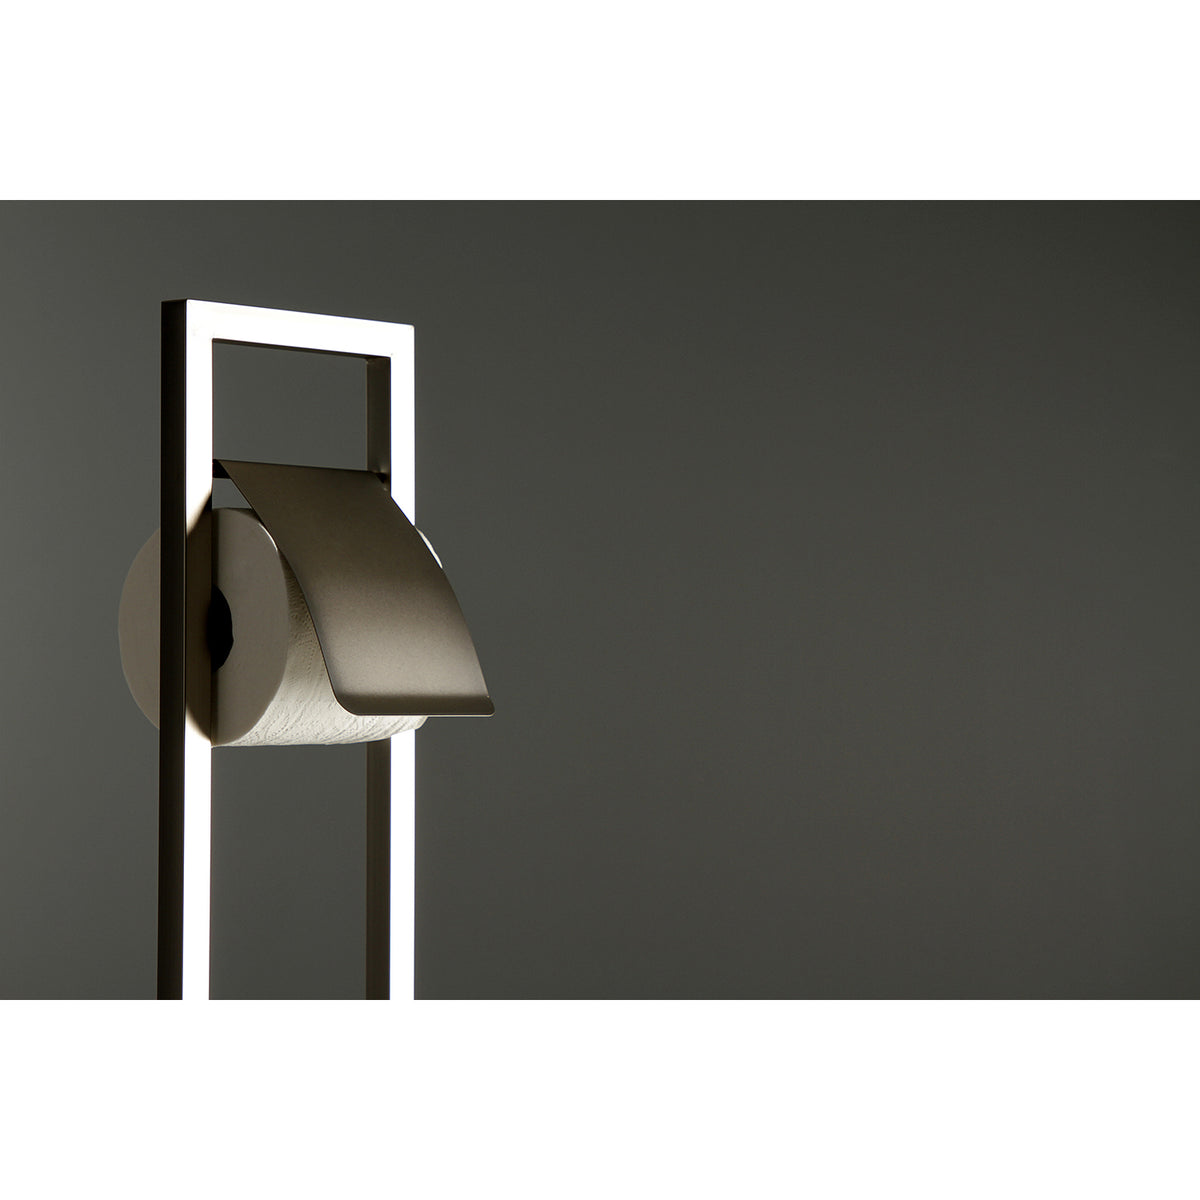 Kingston Brass SCC8501 Edenscape Freestanding Toilet Paper Holder with Storage Shelf, Polished Chrome